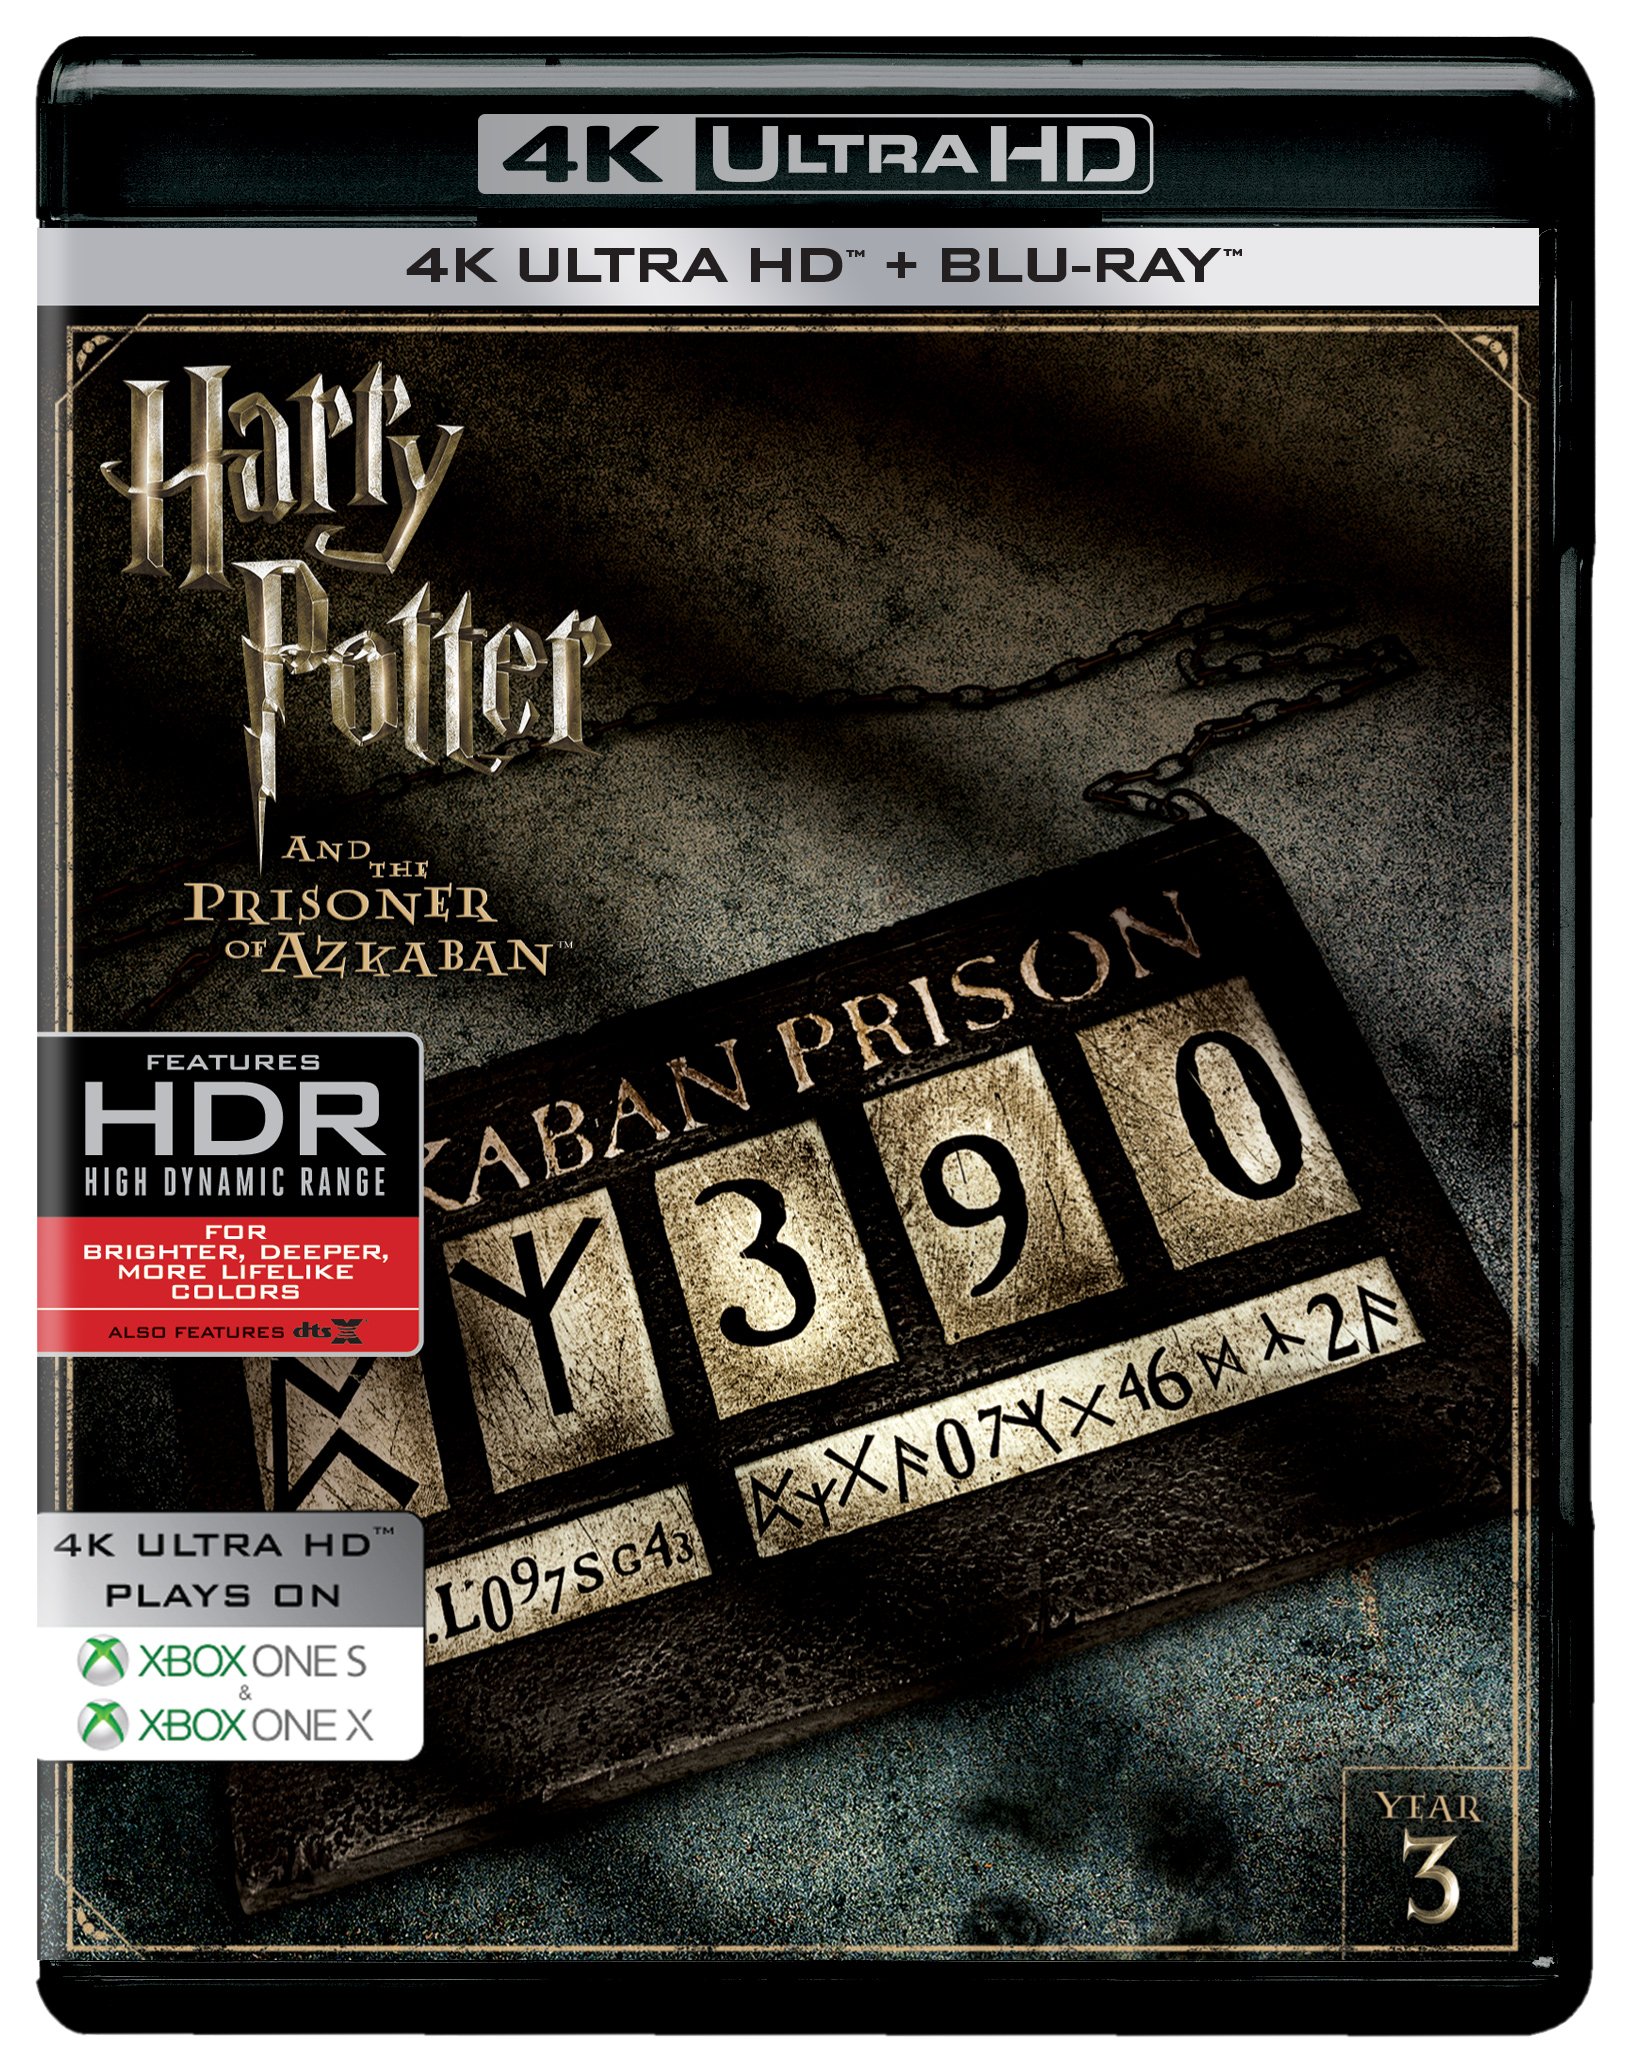 harry-potter-and-the-prisoner-of-azkaban-2004-year-3-4k-uhd-hd-2-disc